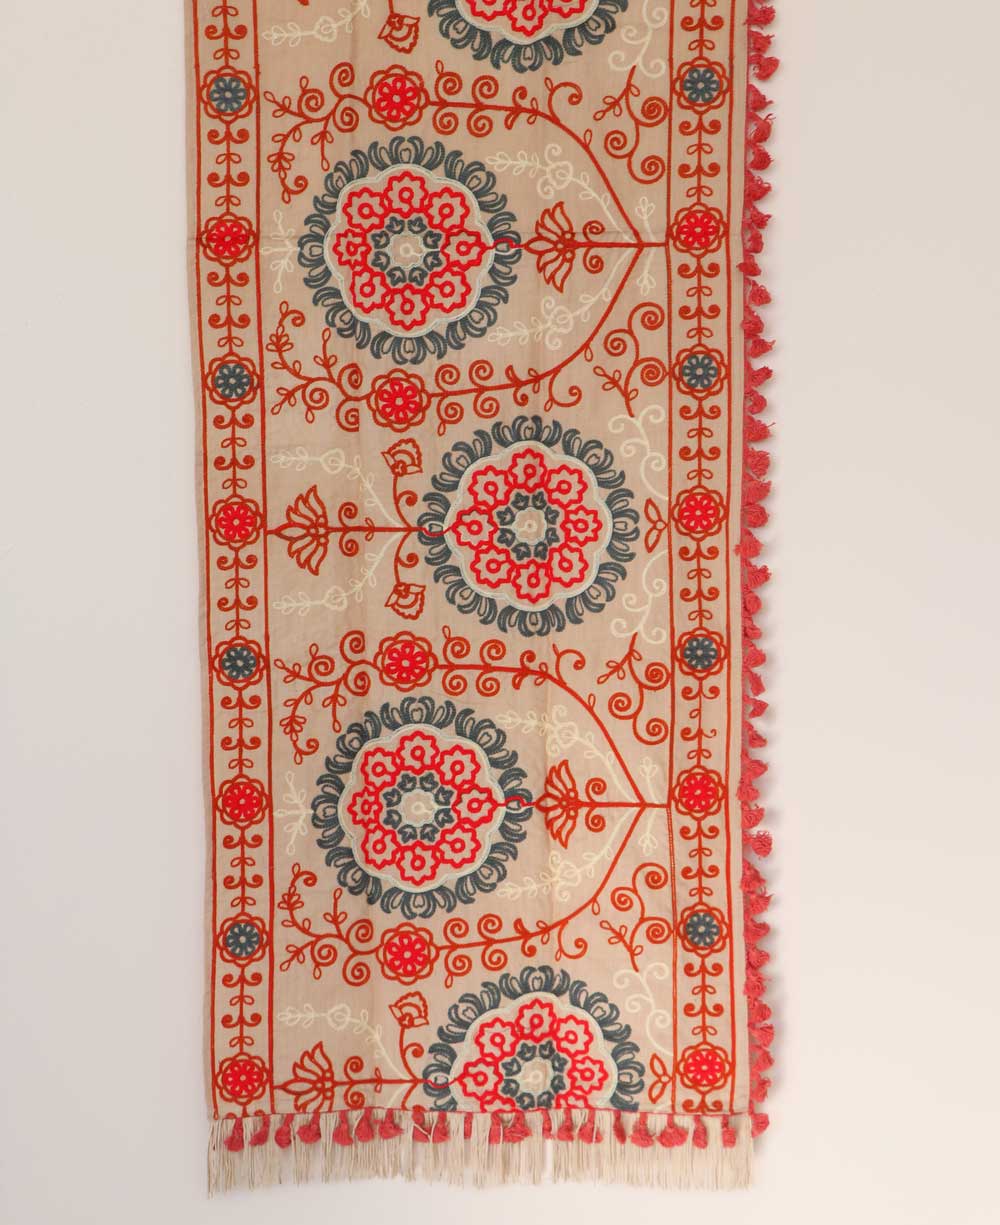 Embroidered Lotus Mandala Design Handloom Scarf Shawl - Scarves